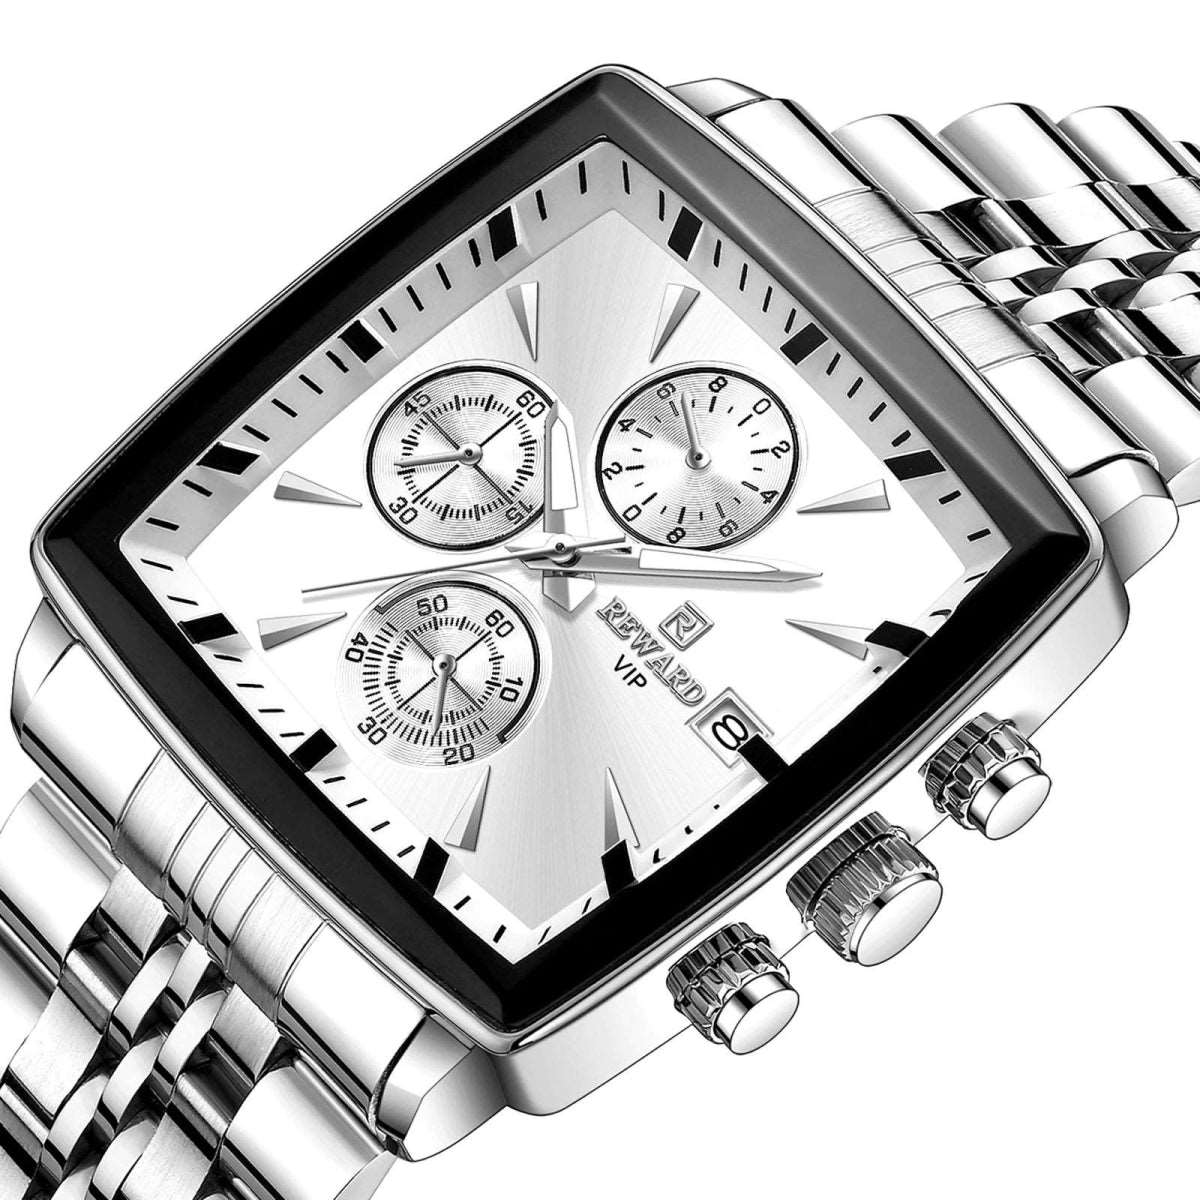 Reward RD81100 Lux Square Watch - Uniquely You Online - Watch